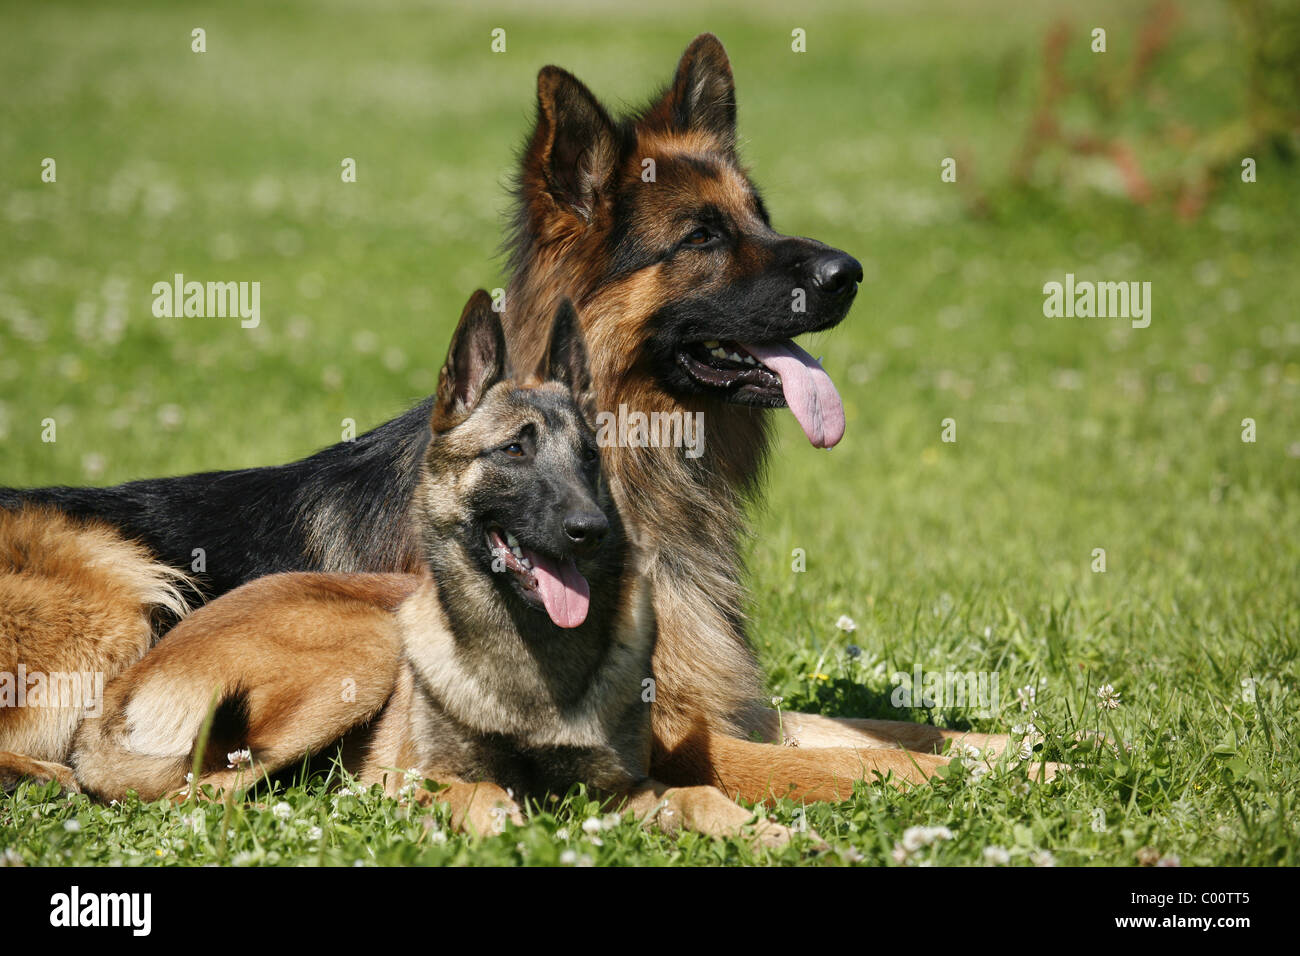 Belgian shepherd hund hi-res stock photography and images - Alamy